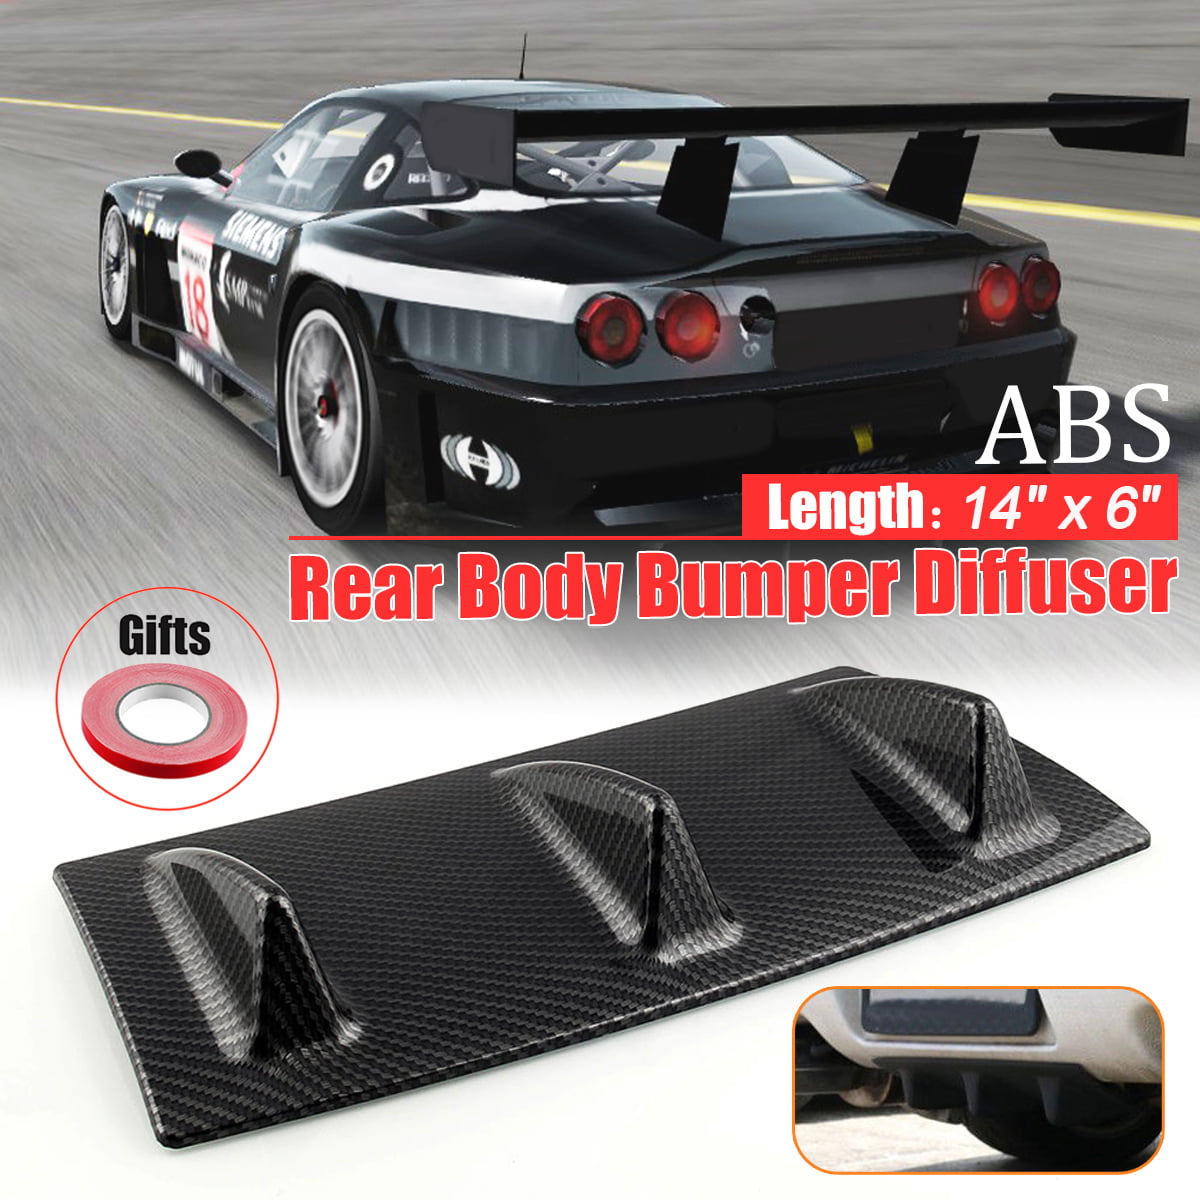 Carbon fiber Gorgeri Car Rear Bumper Diffuser,ABS Material Universal Shark Fin Diffuser Rear Bumper Shark Fin 